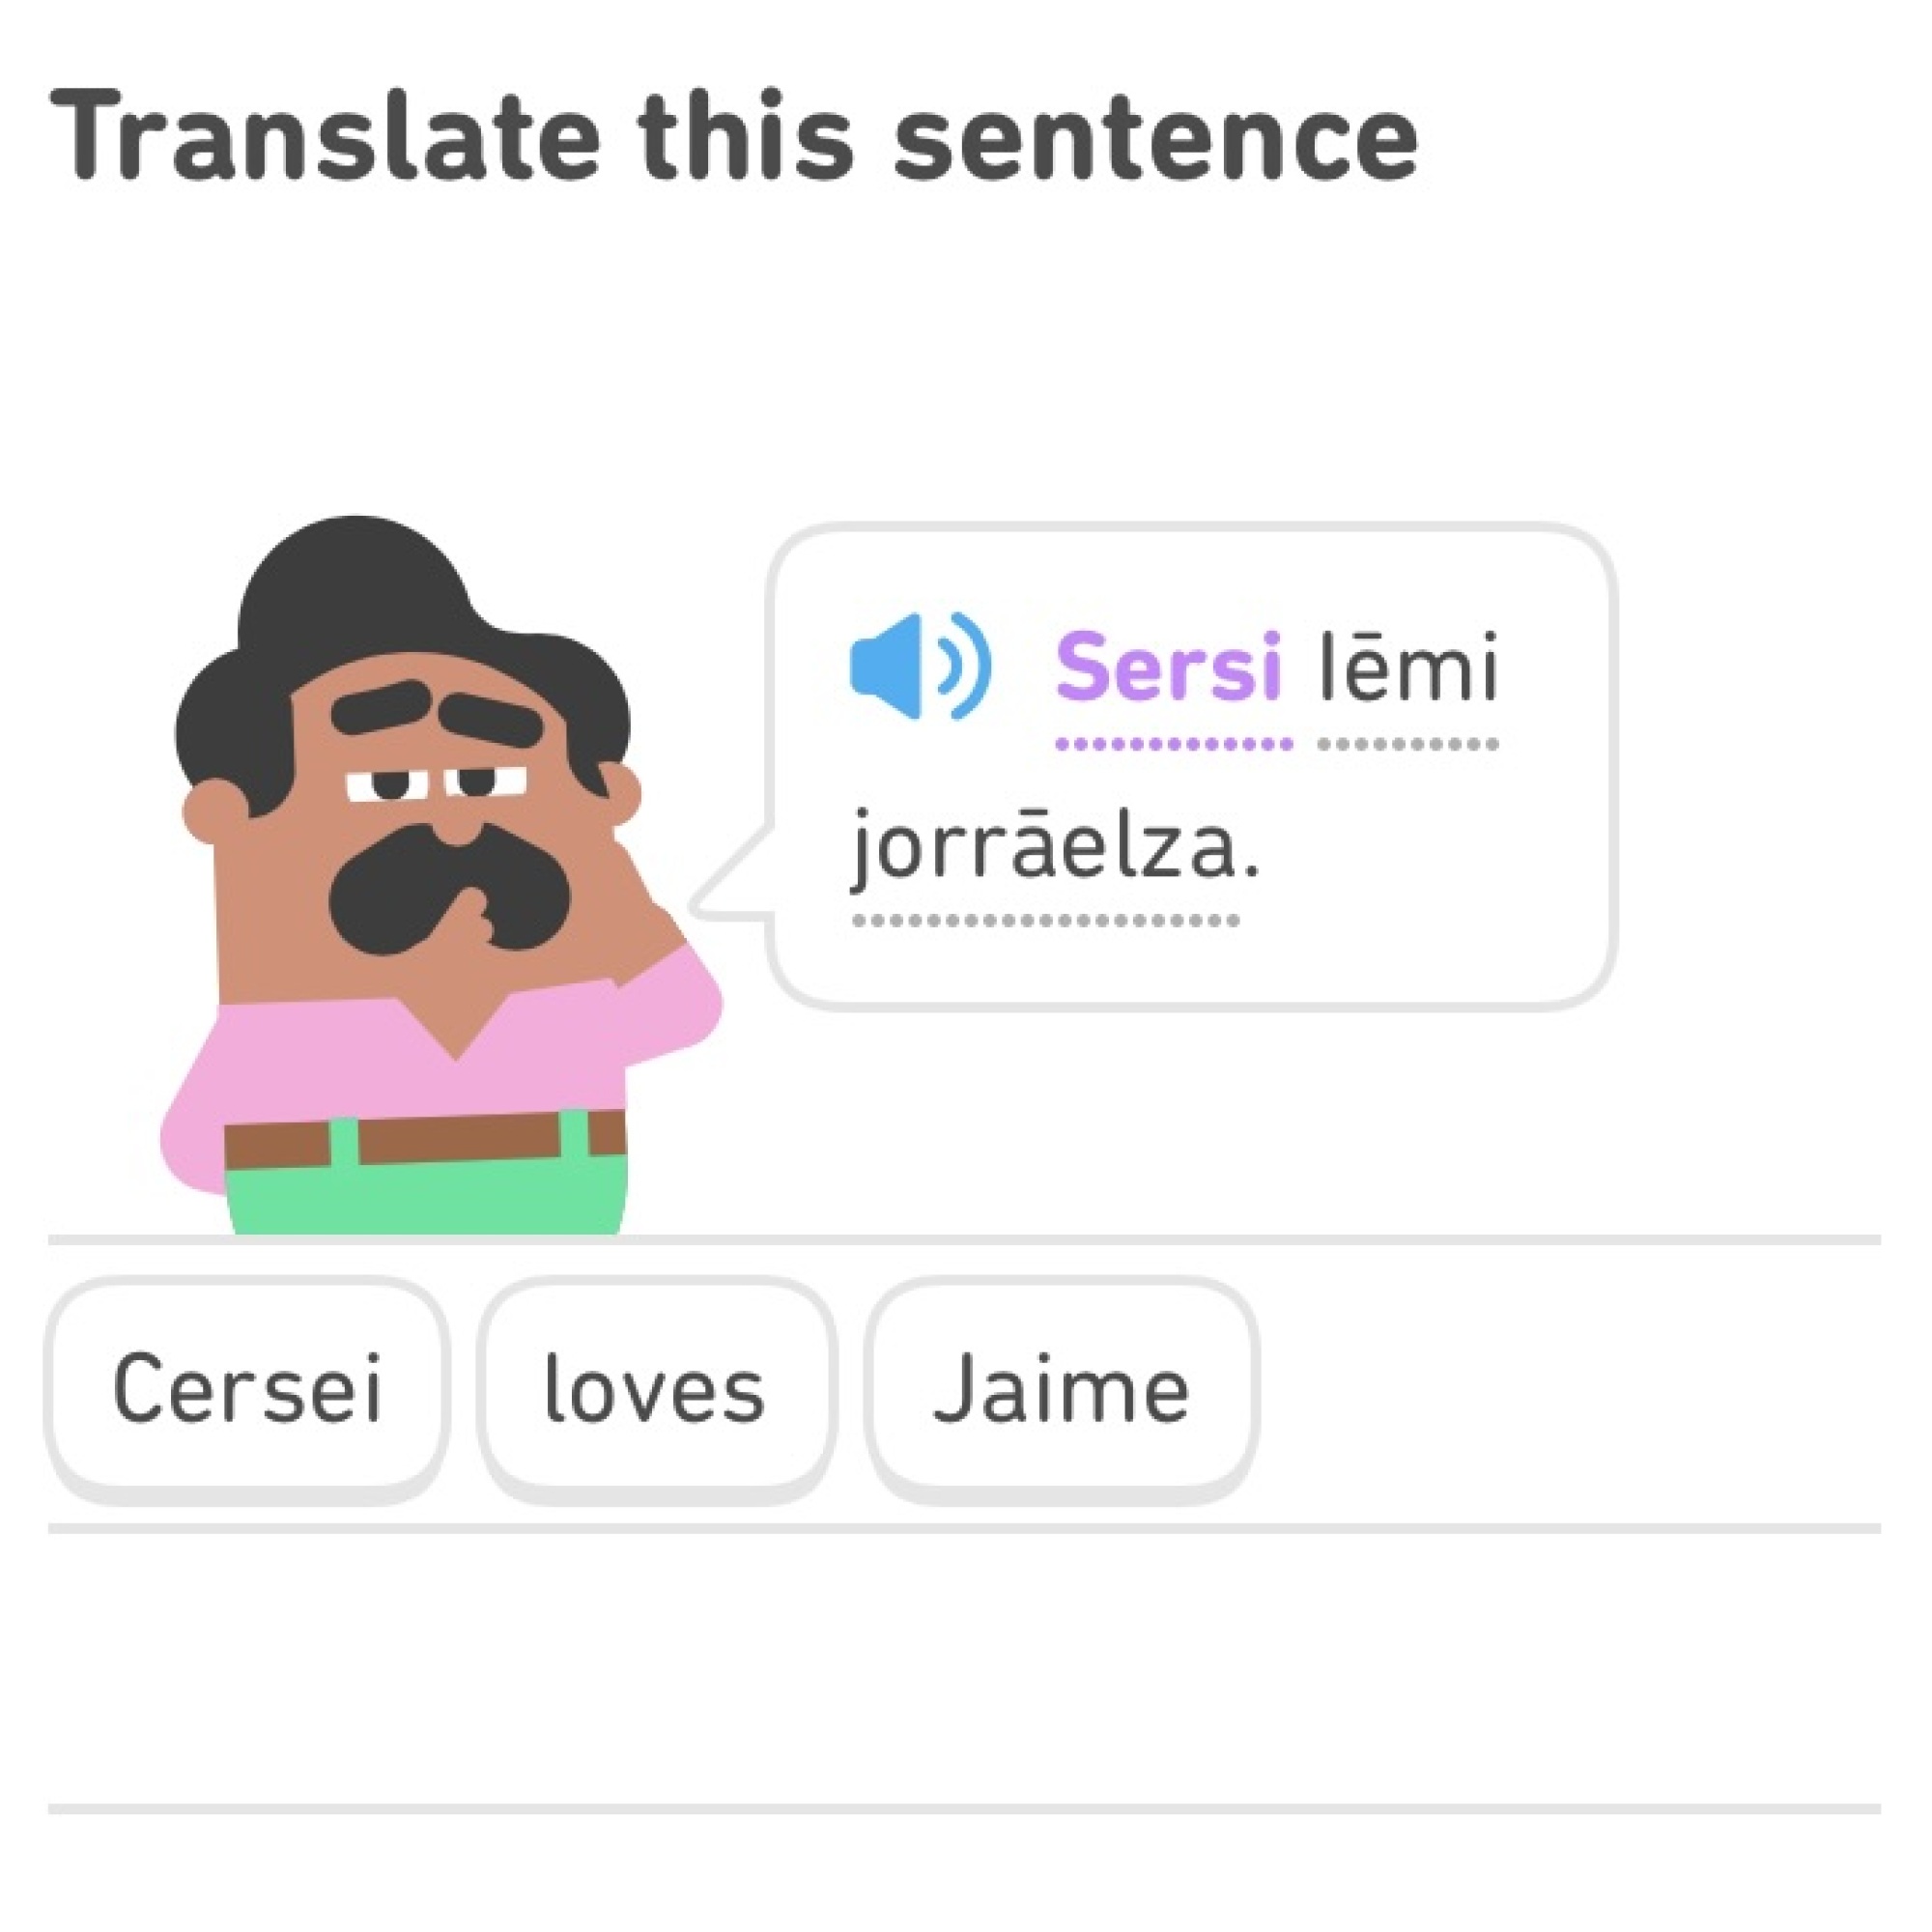 Un exercice Duolingo traduisant la phrase 